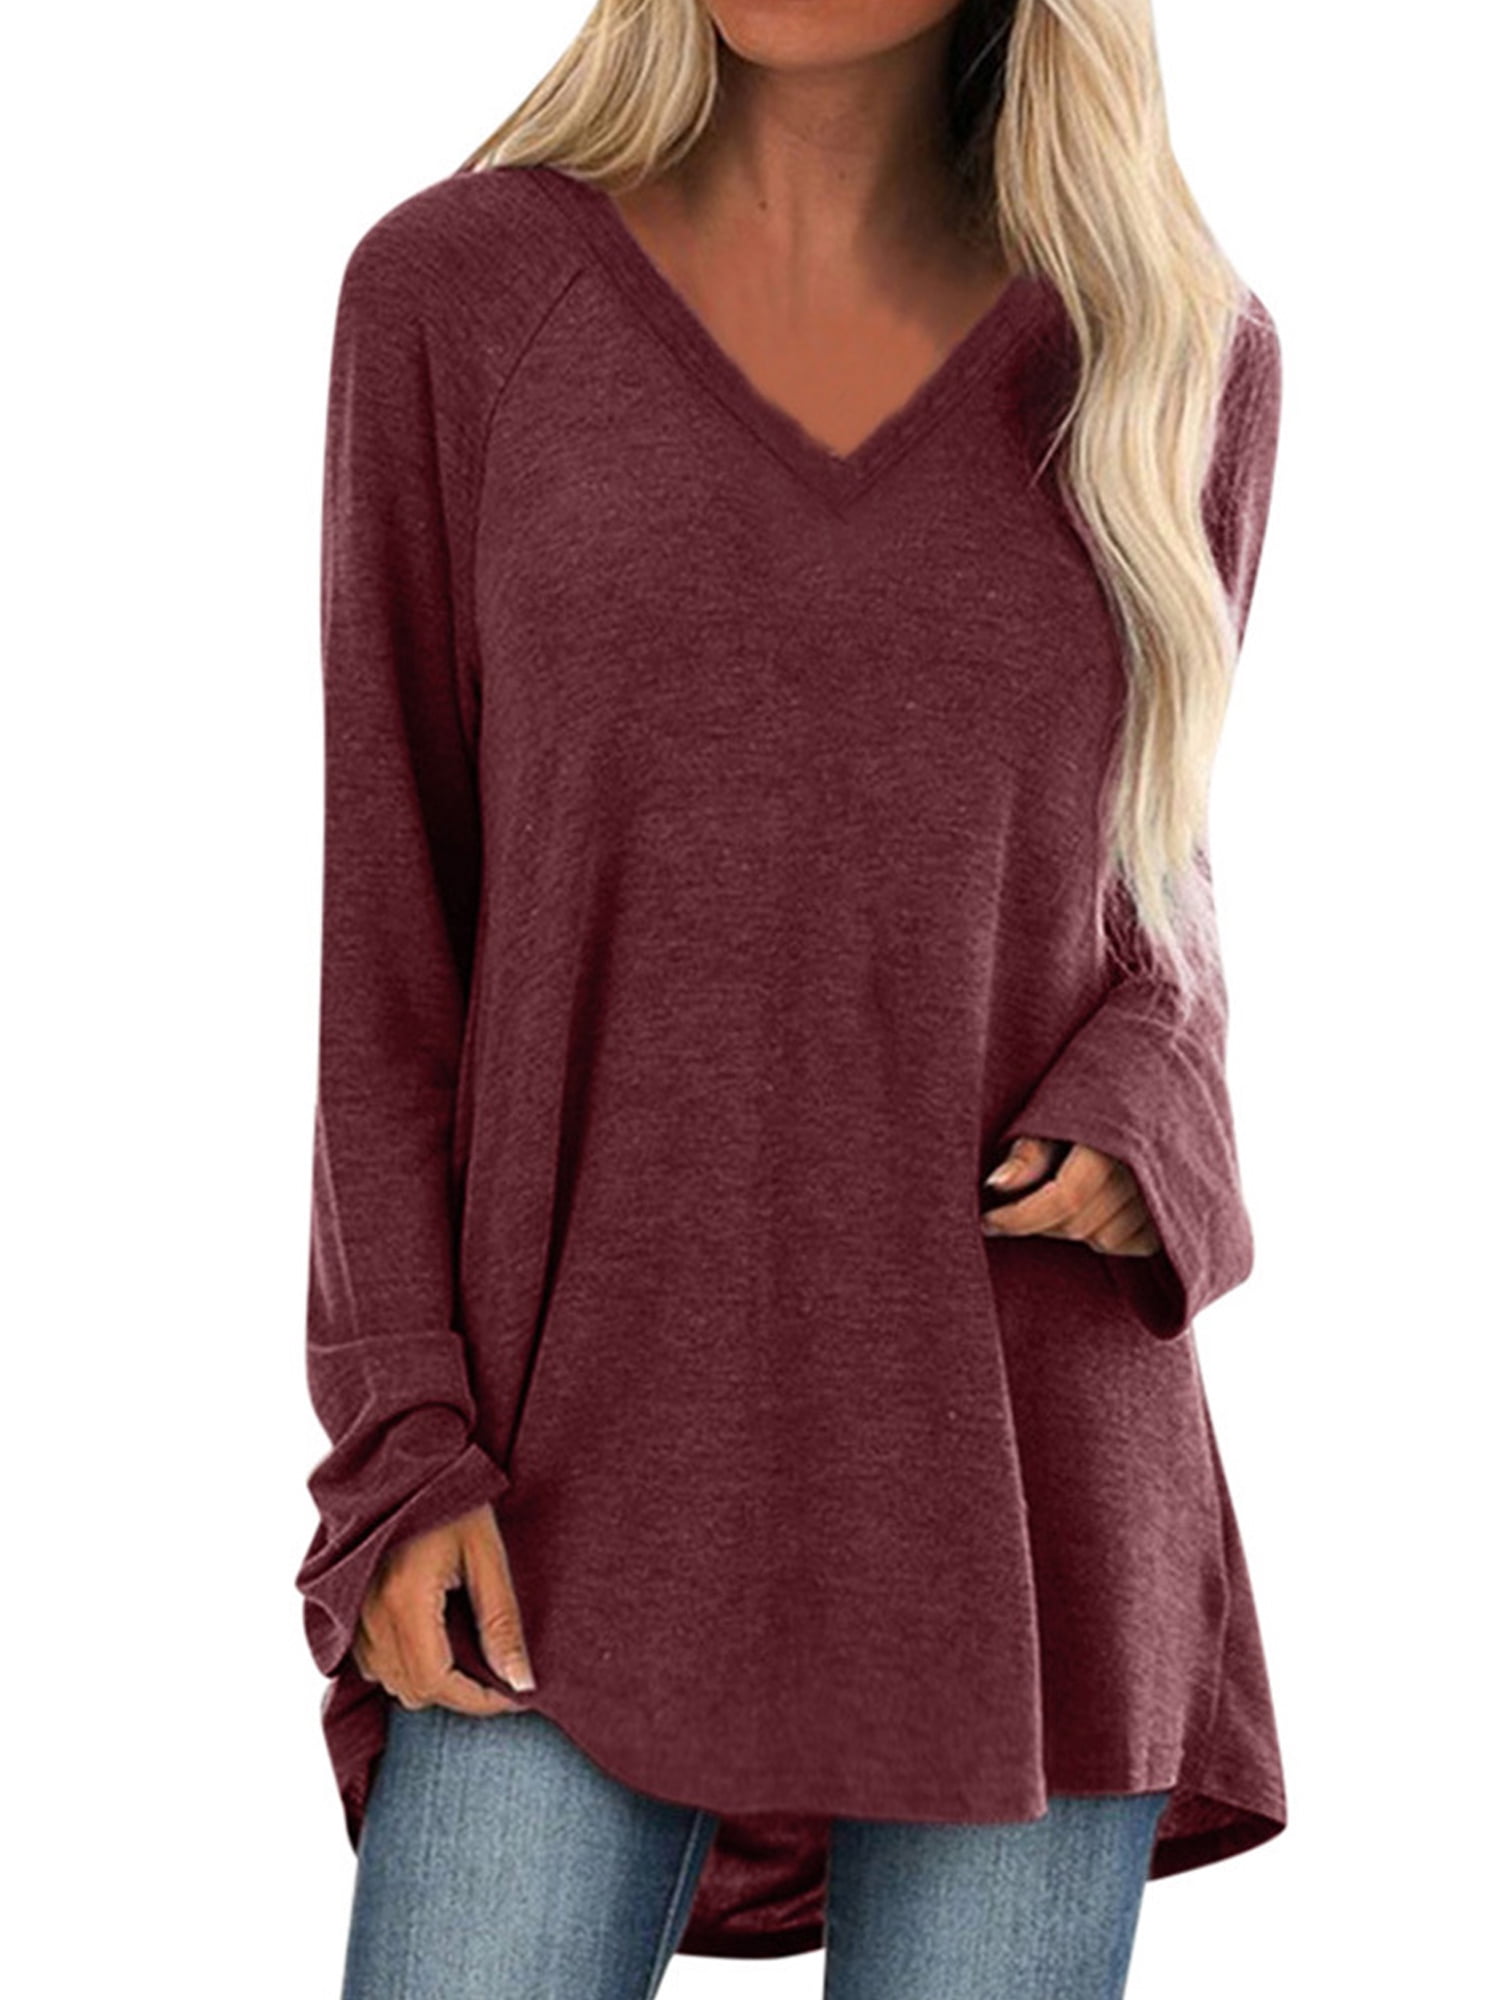 luethbiezx Plus Size Women Long Sleeve Tunic Top Pullover - Walmart.com